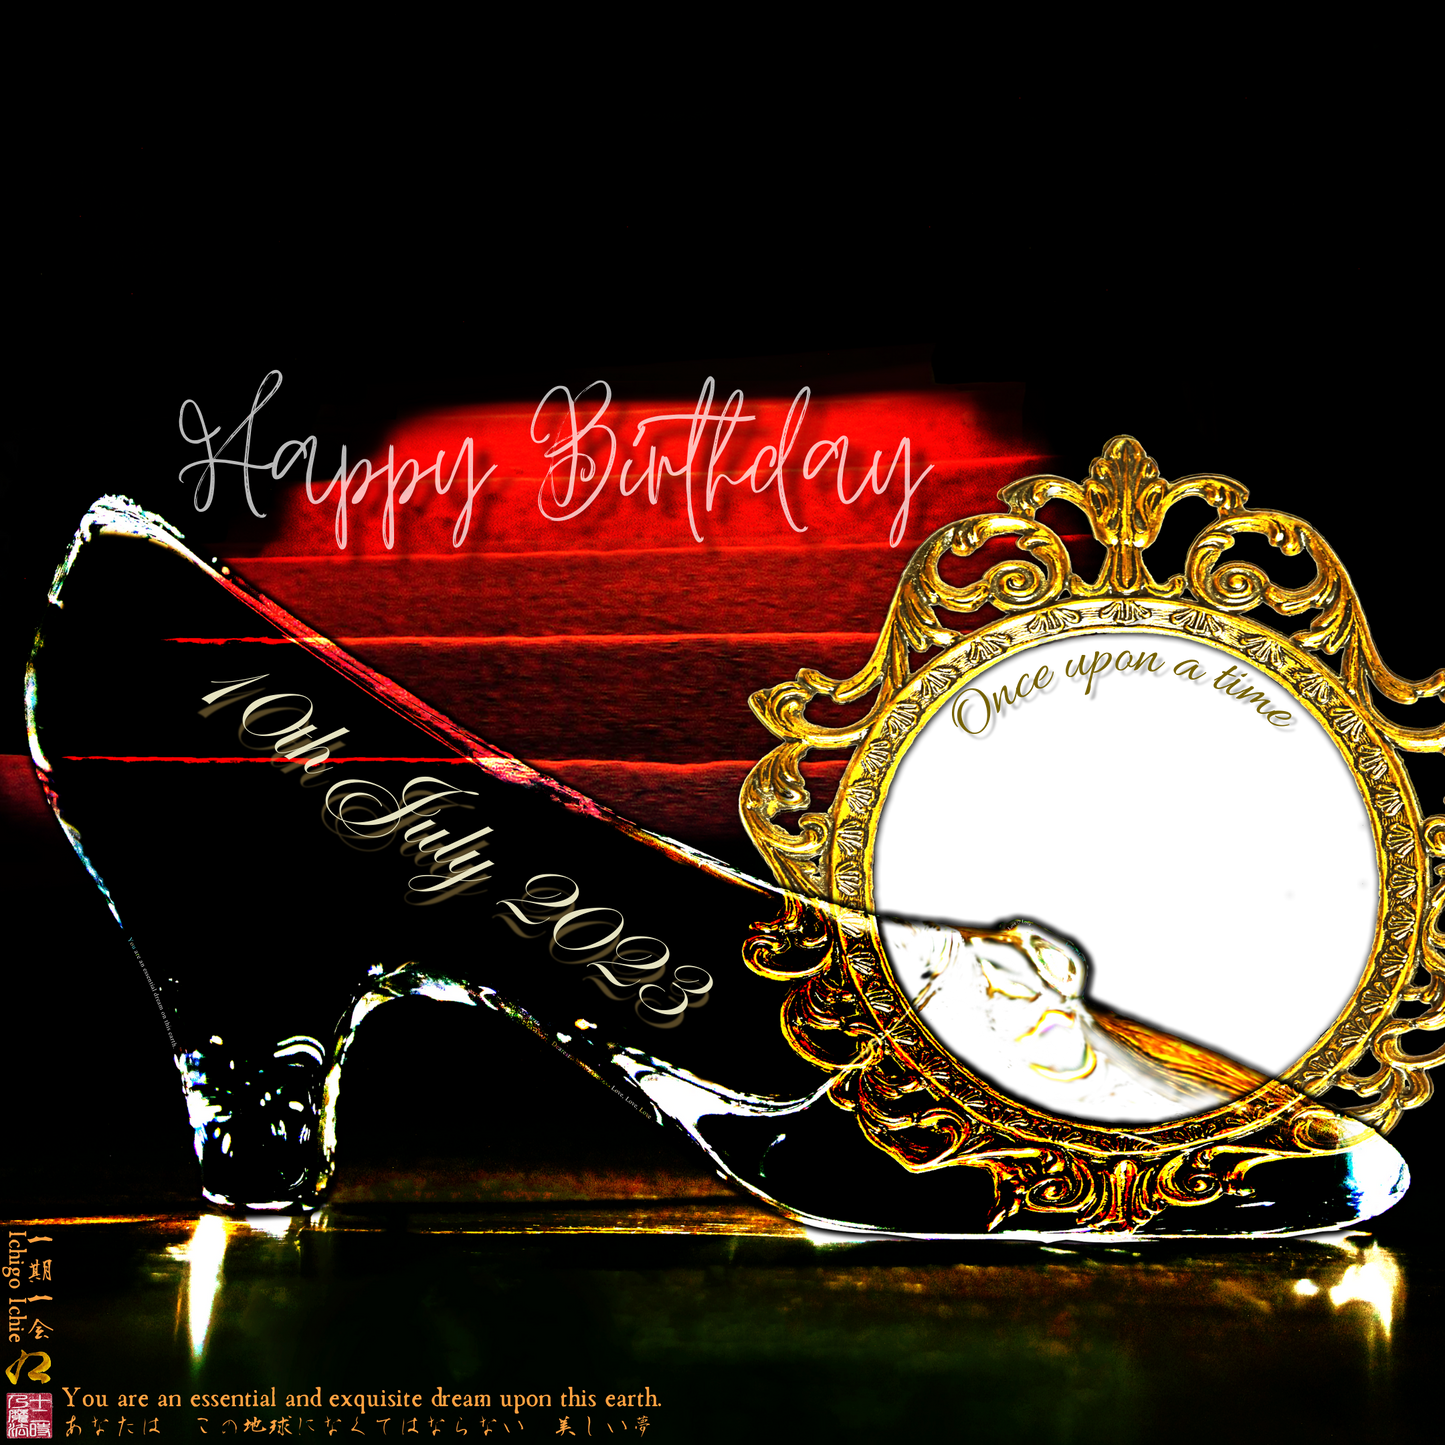 Happy Birthday Glass Slipper "Ichigo Ichie" 10th July 2023 the Right (1-of-1) NFT Art